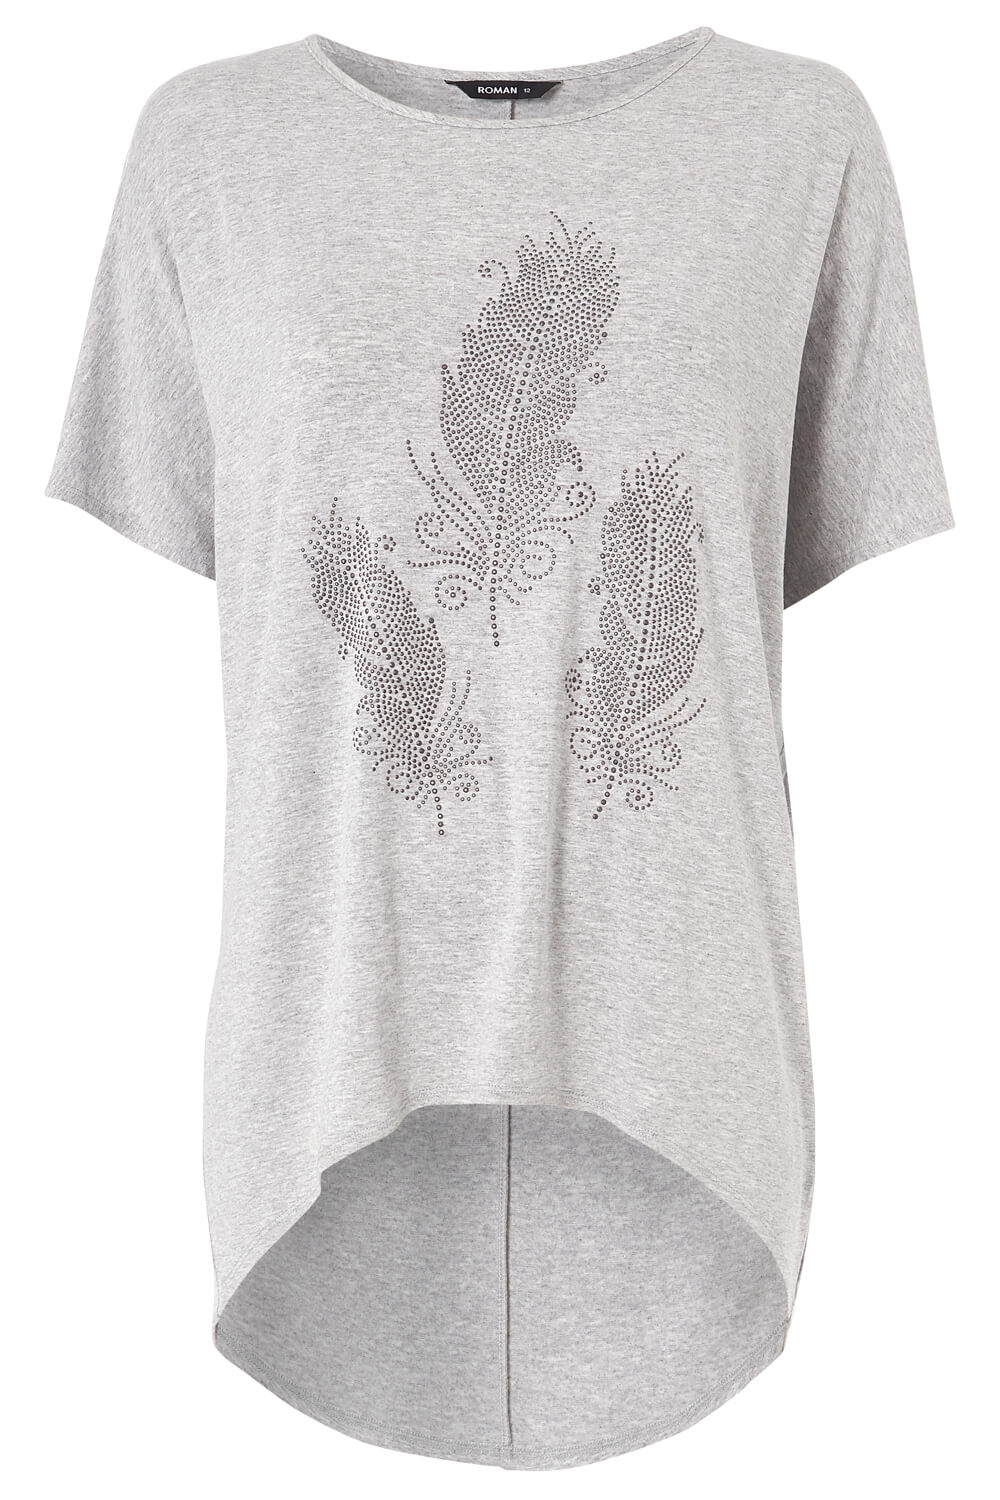 Grey Feather Diamante Embellished T-Shirt, Image 5 of 5